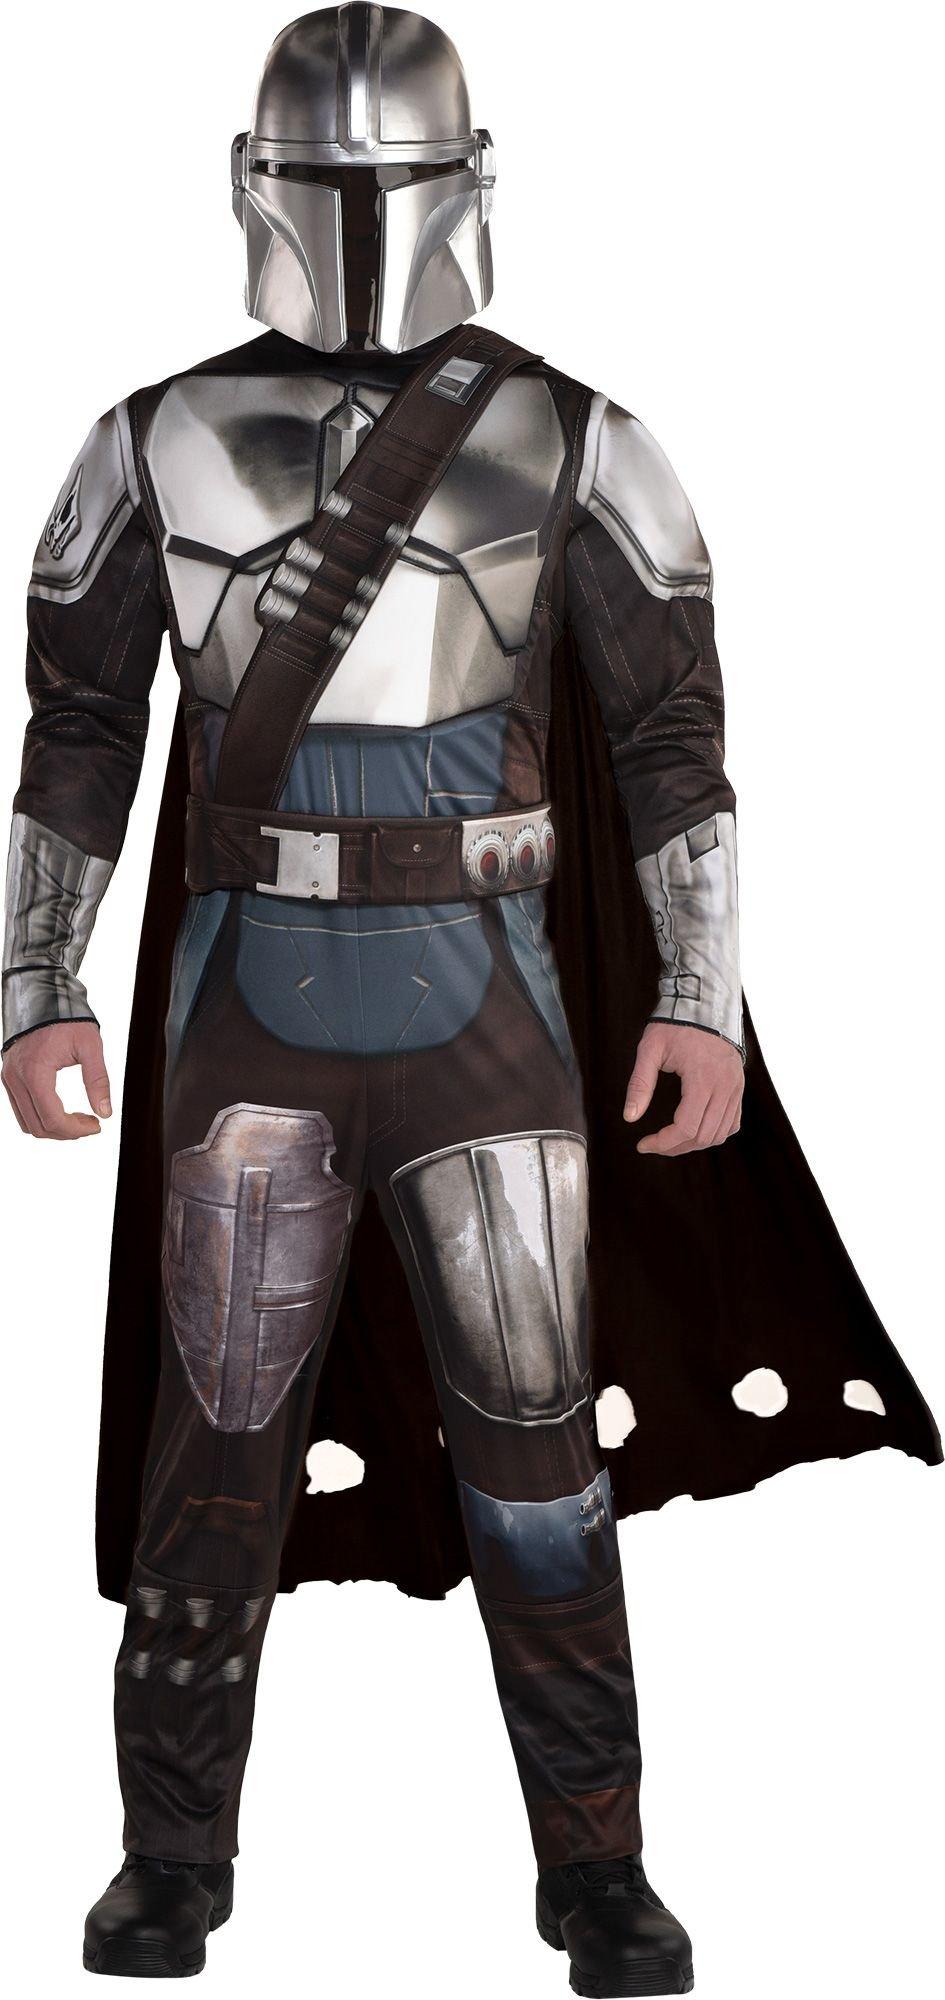 Adult Mandalorian Deluxe Costume - Star Wars: The Mandalorian Season 2